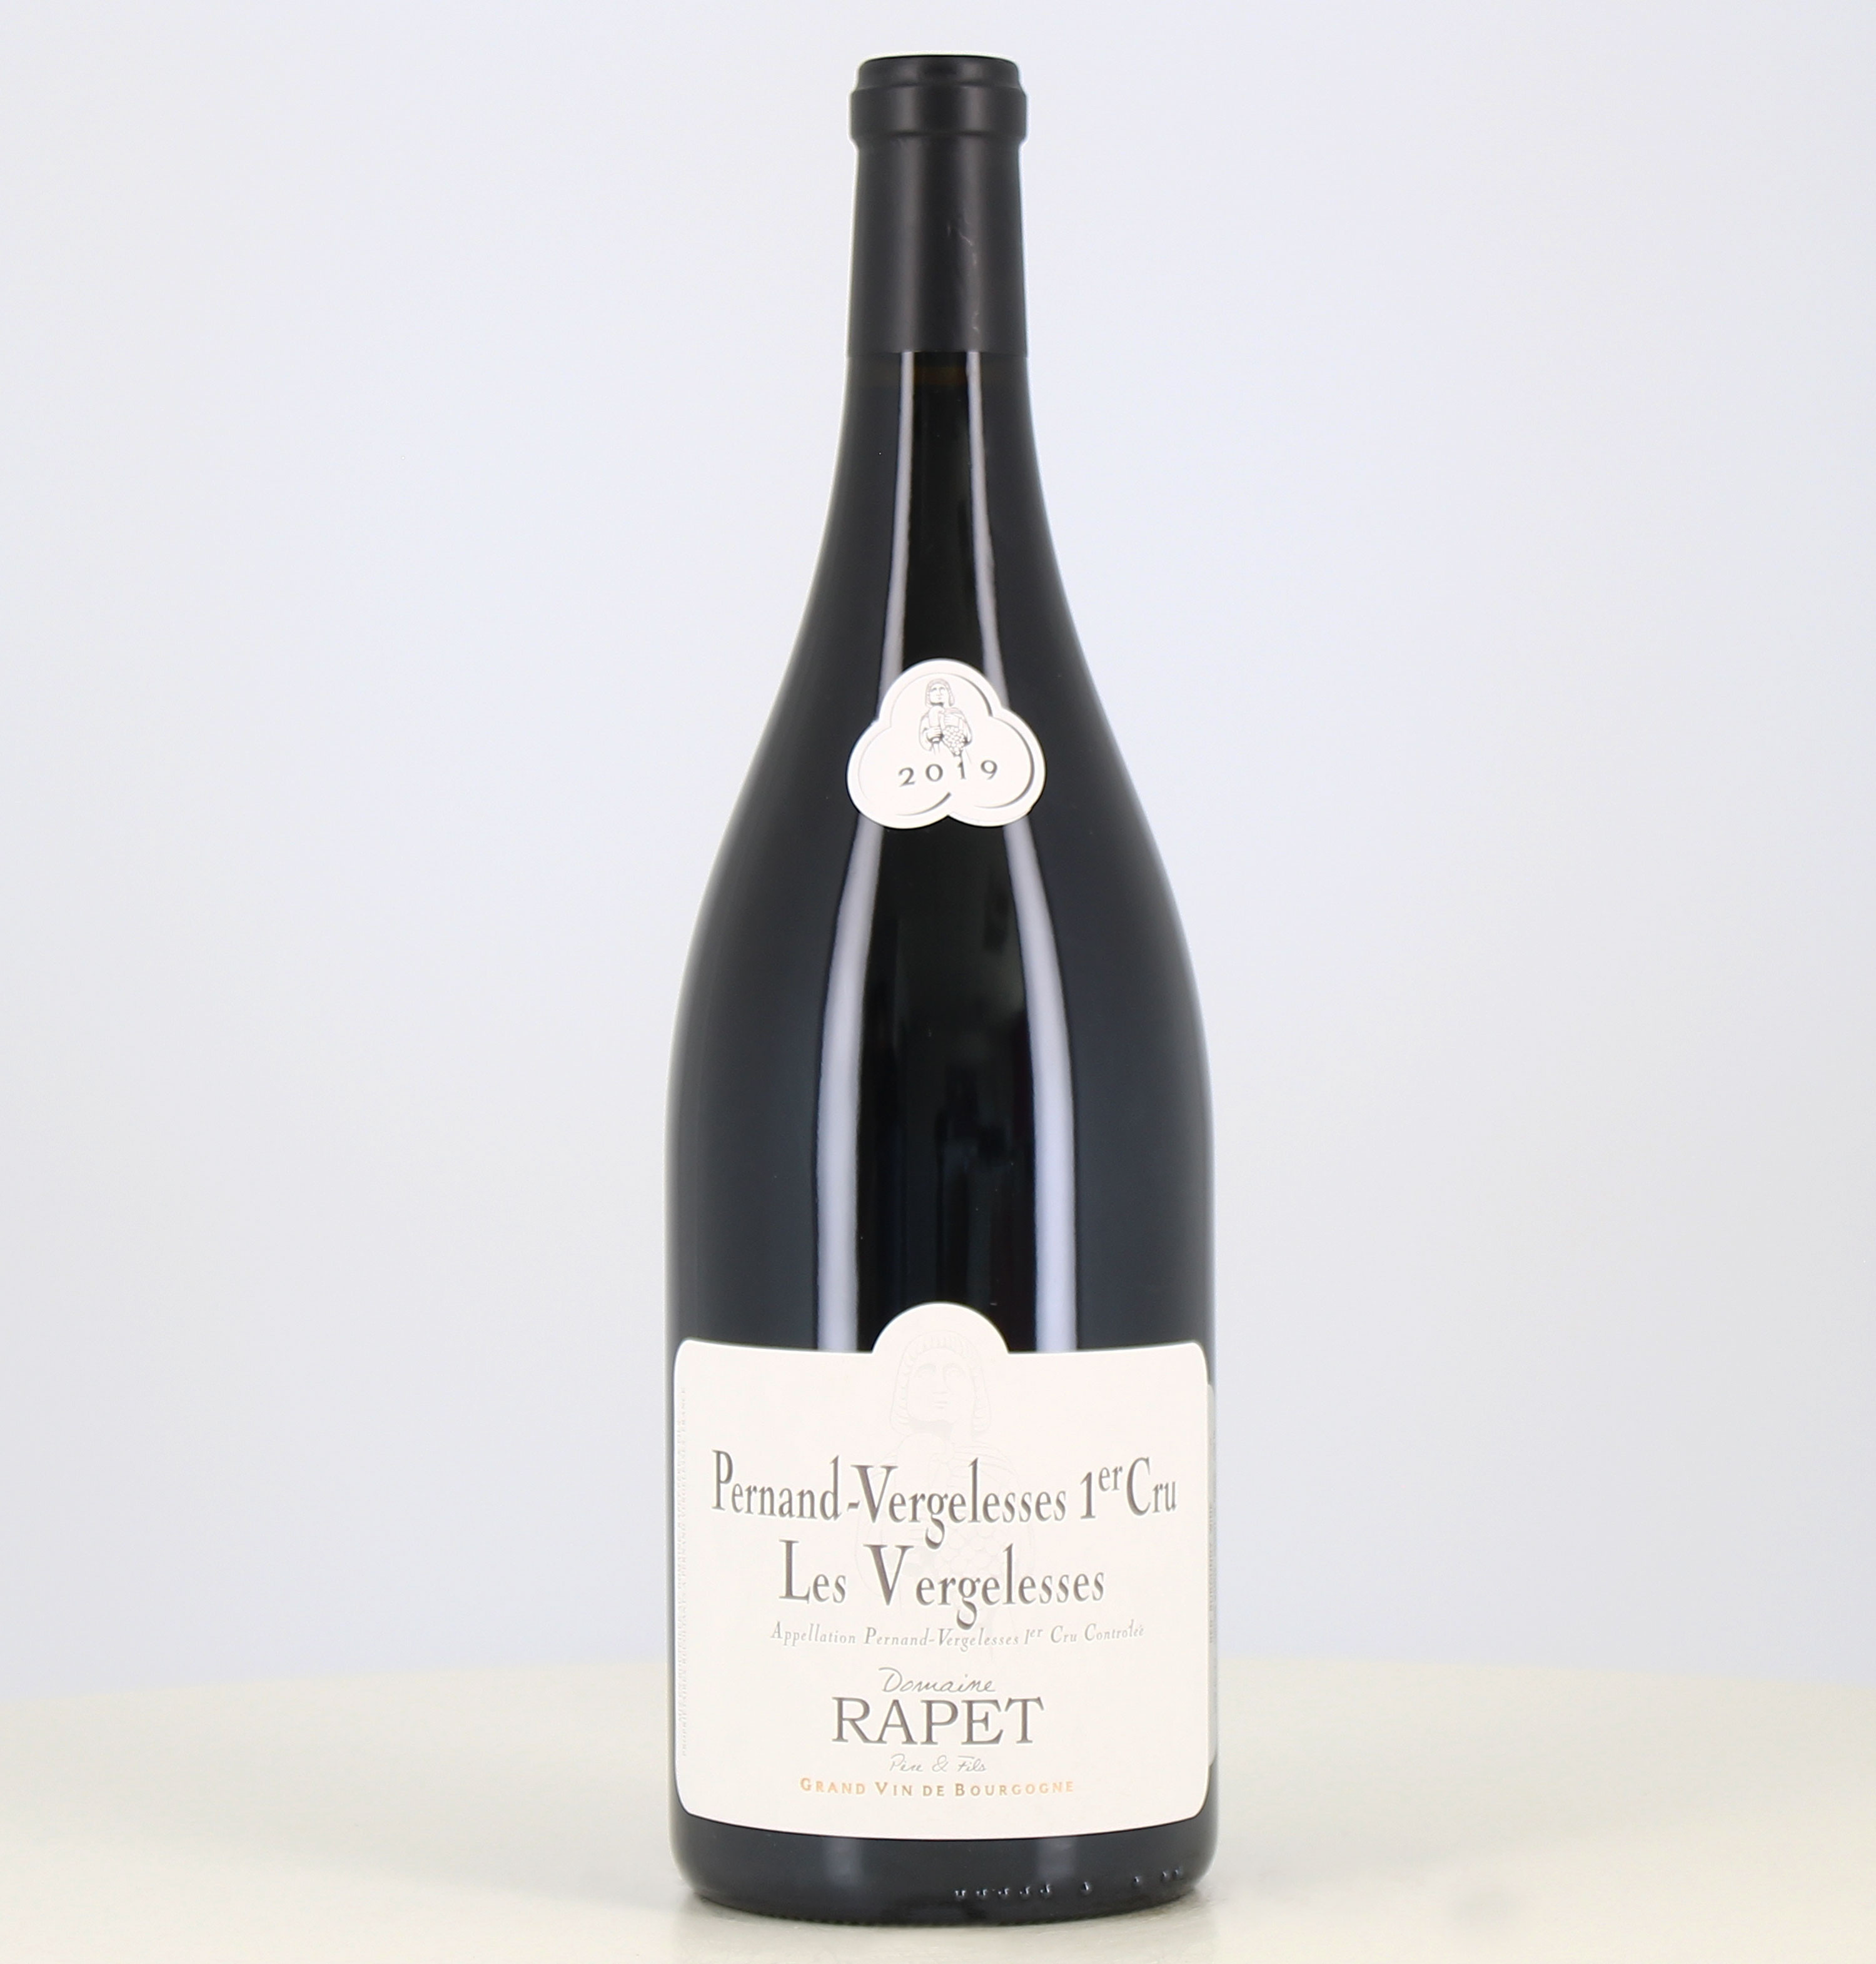 Magnum of red wine Pernand Vergelesses 1er cru Les Vergelesses from Rapet estate 2019 